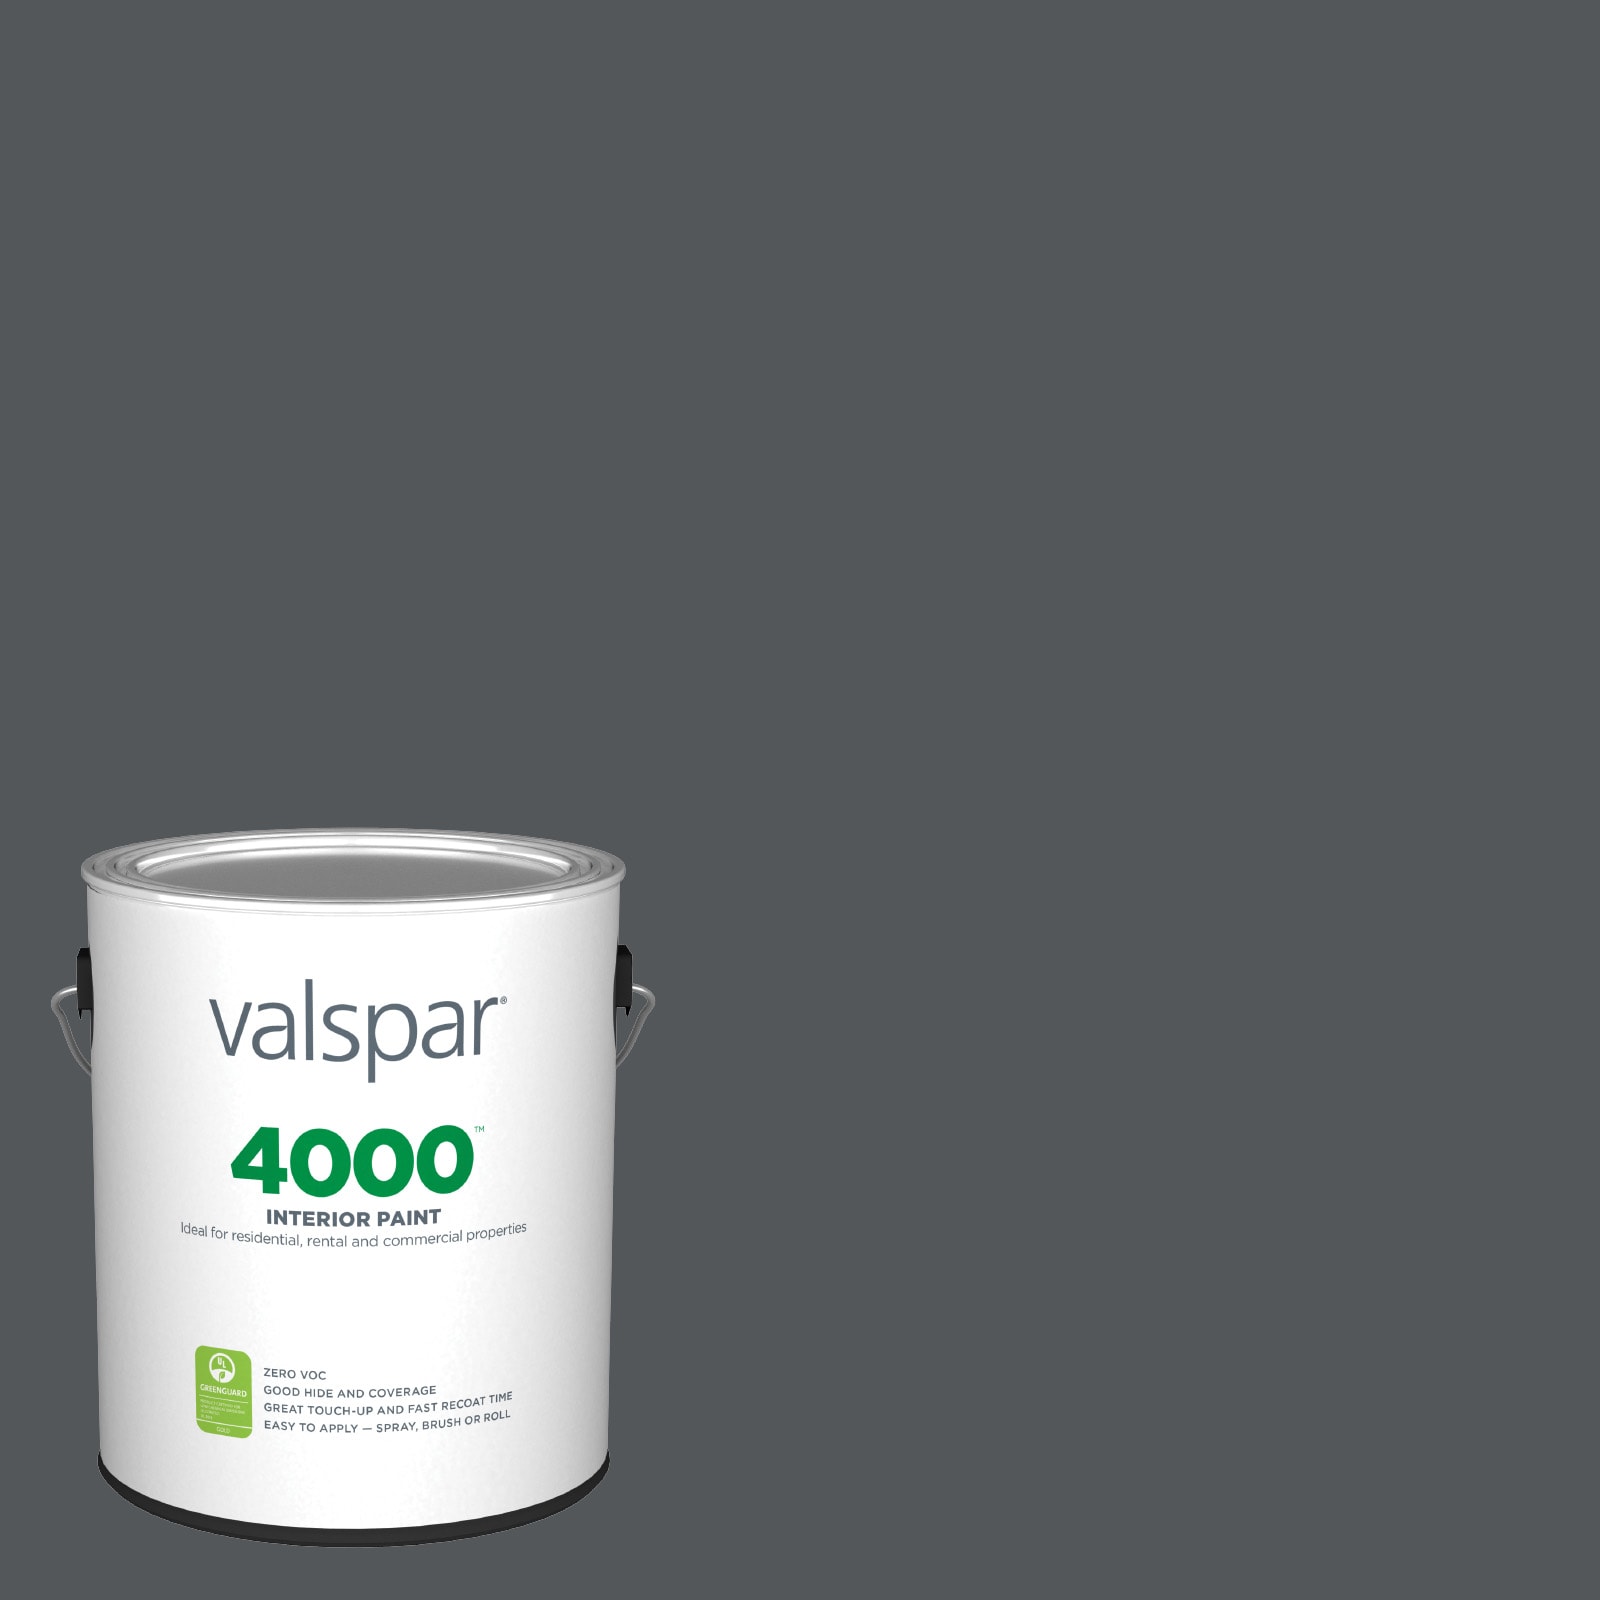 Valspar 4000 Flat Blindfold 4007-2c Latex Interior Paint (1-Gallon) in ...